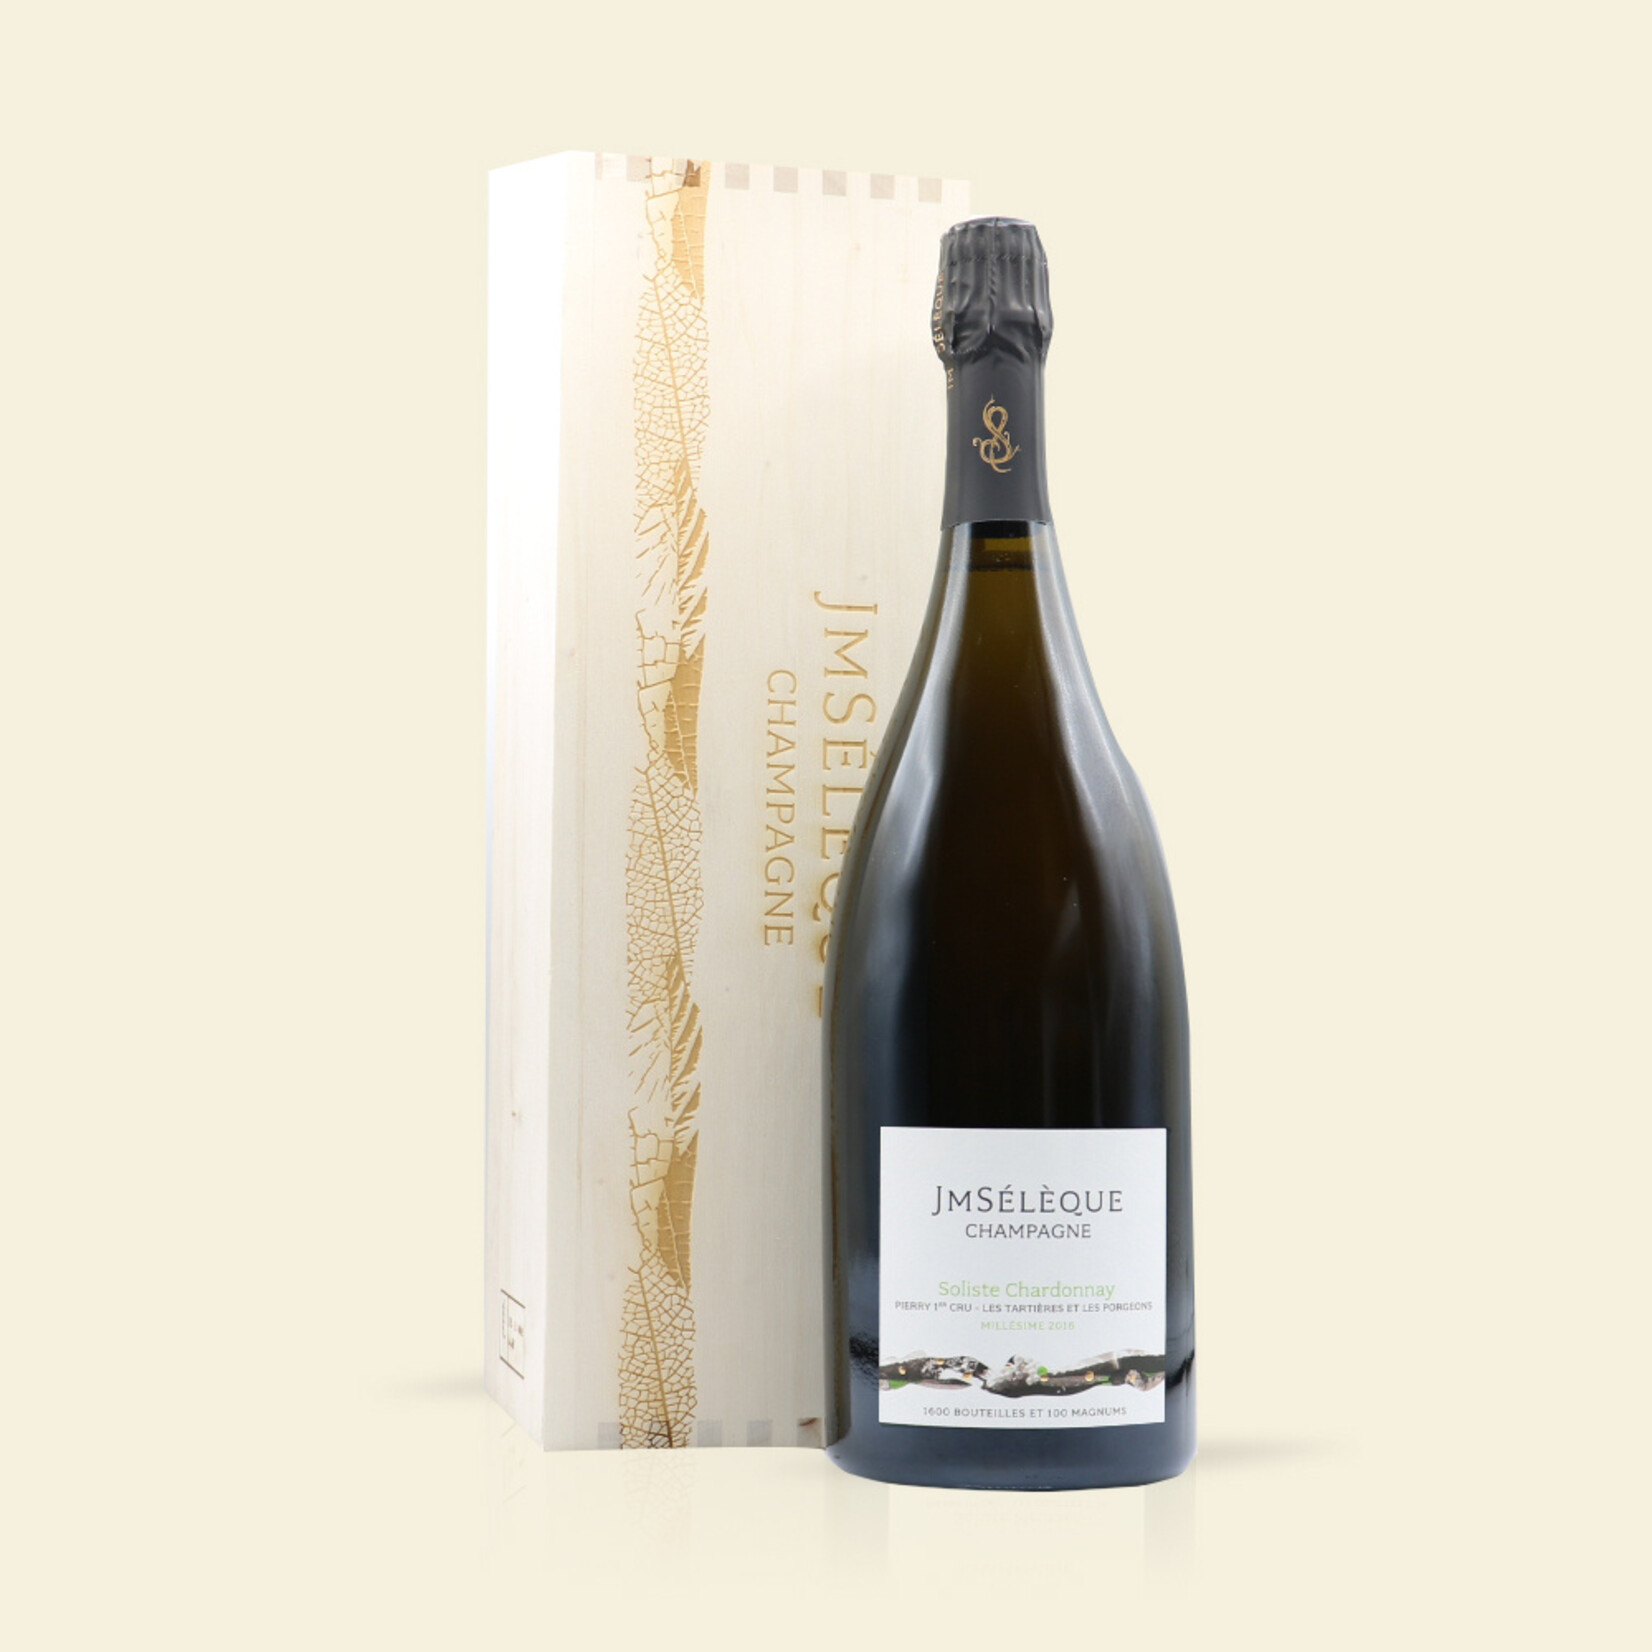 JM Sélèque Vintage 2016 Soliste Chardonnay 1er cru 'Tartières/Porgeon magnum (1.5 liter)